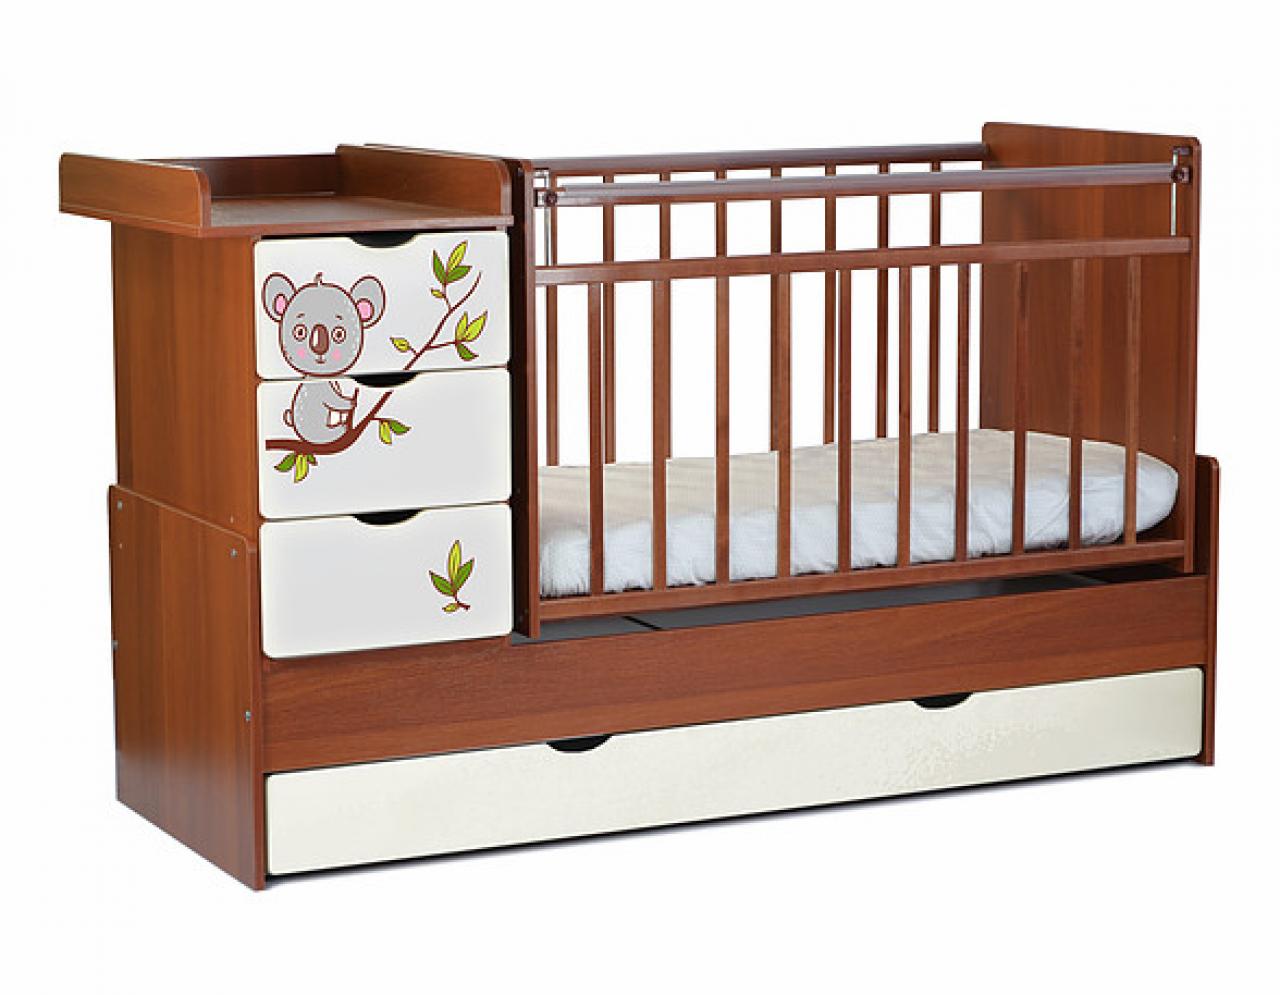 Original wooden crib for a child